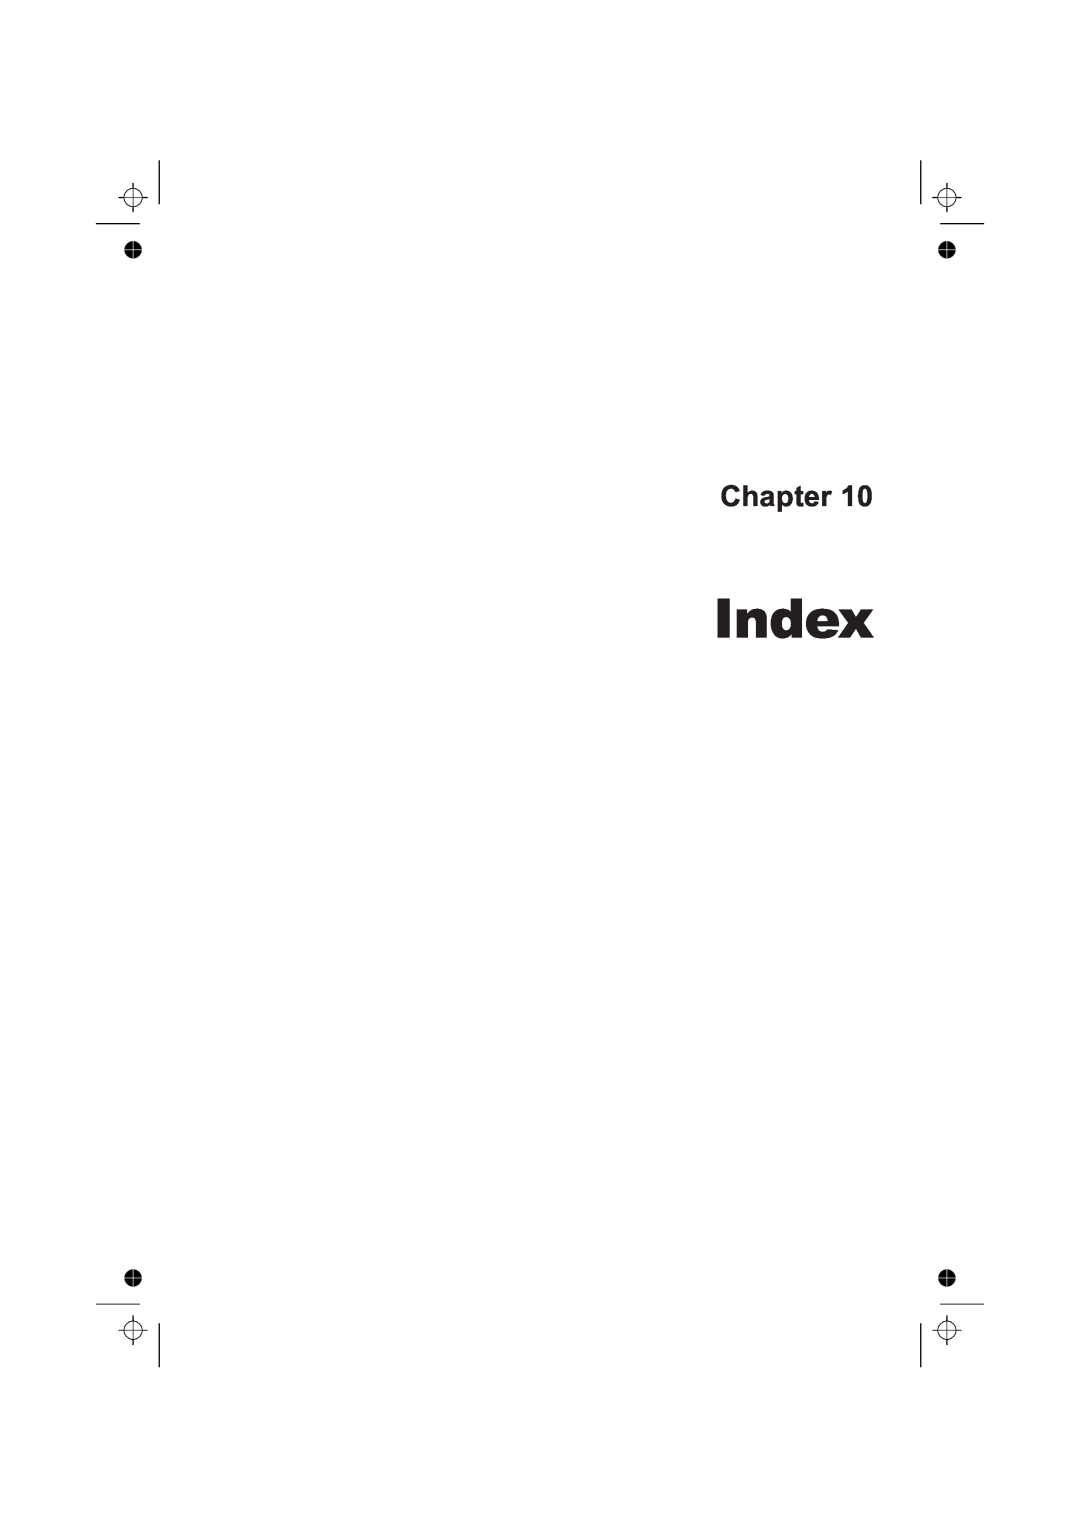 Fluke PM6681R, PM6685R manual Index, Chapter 